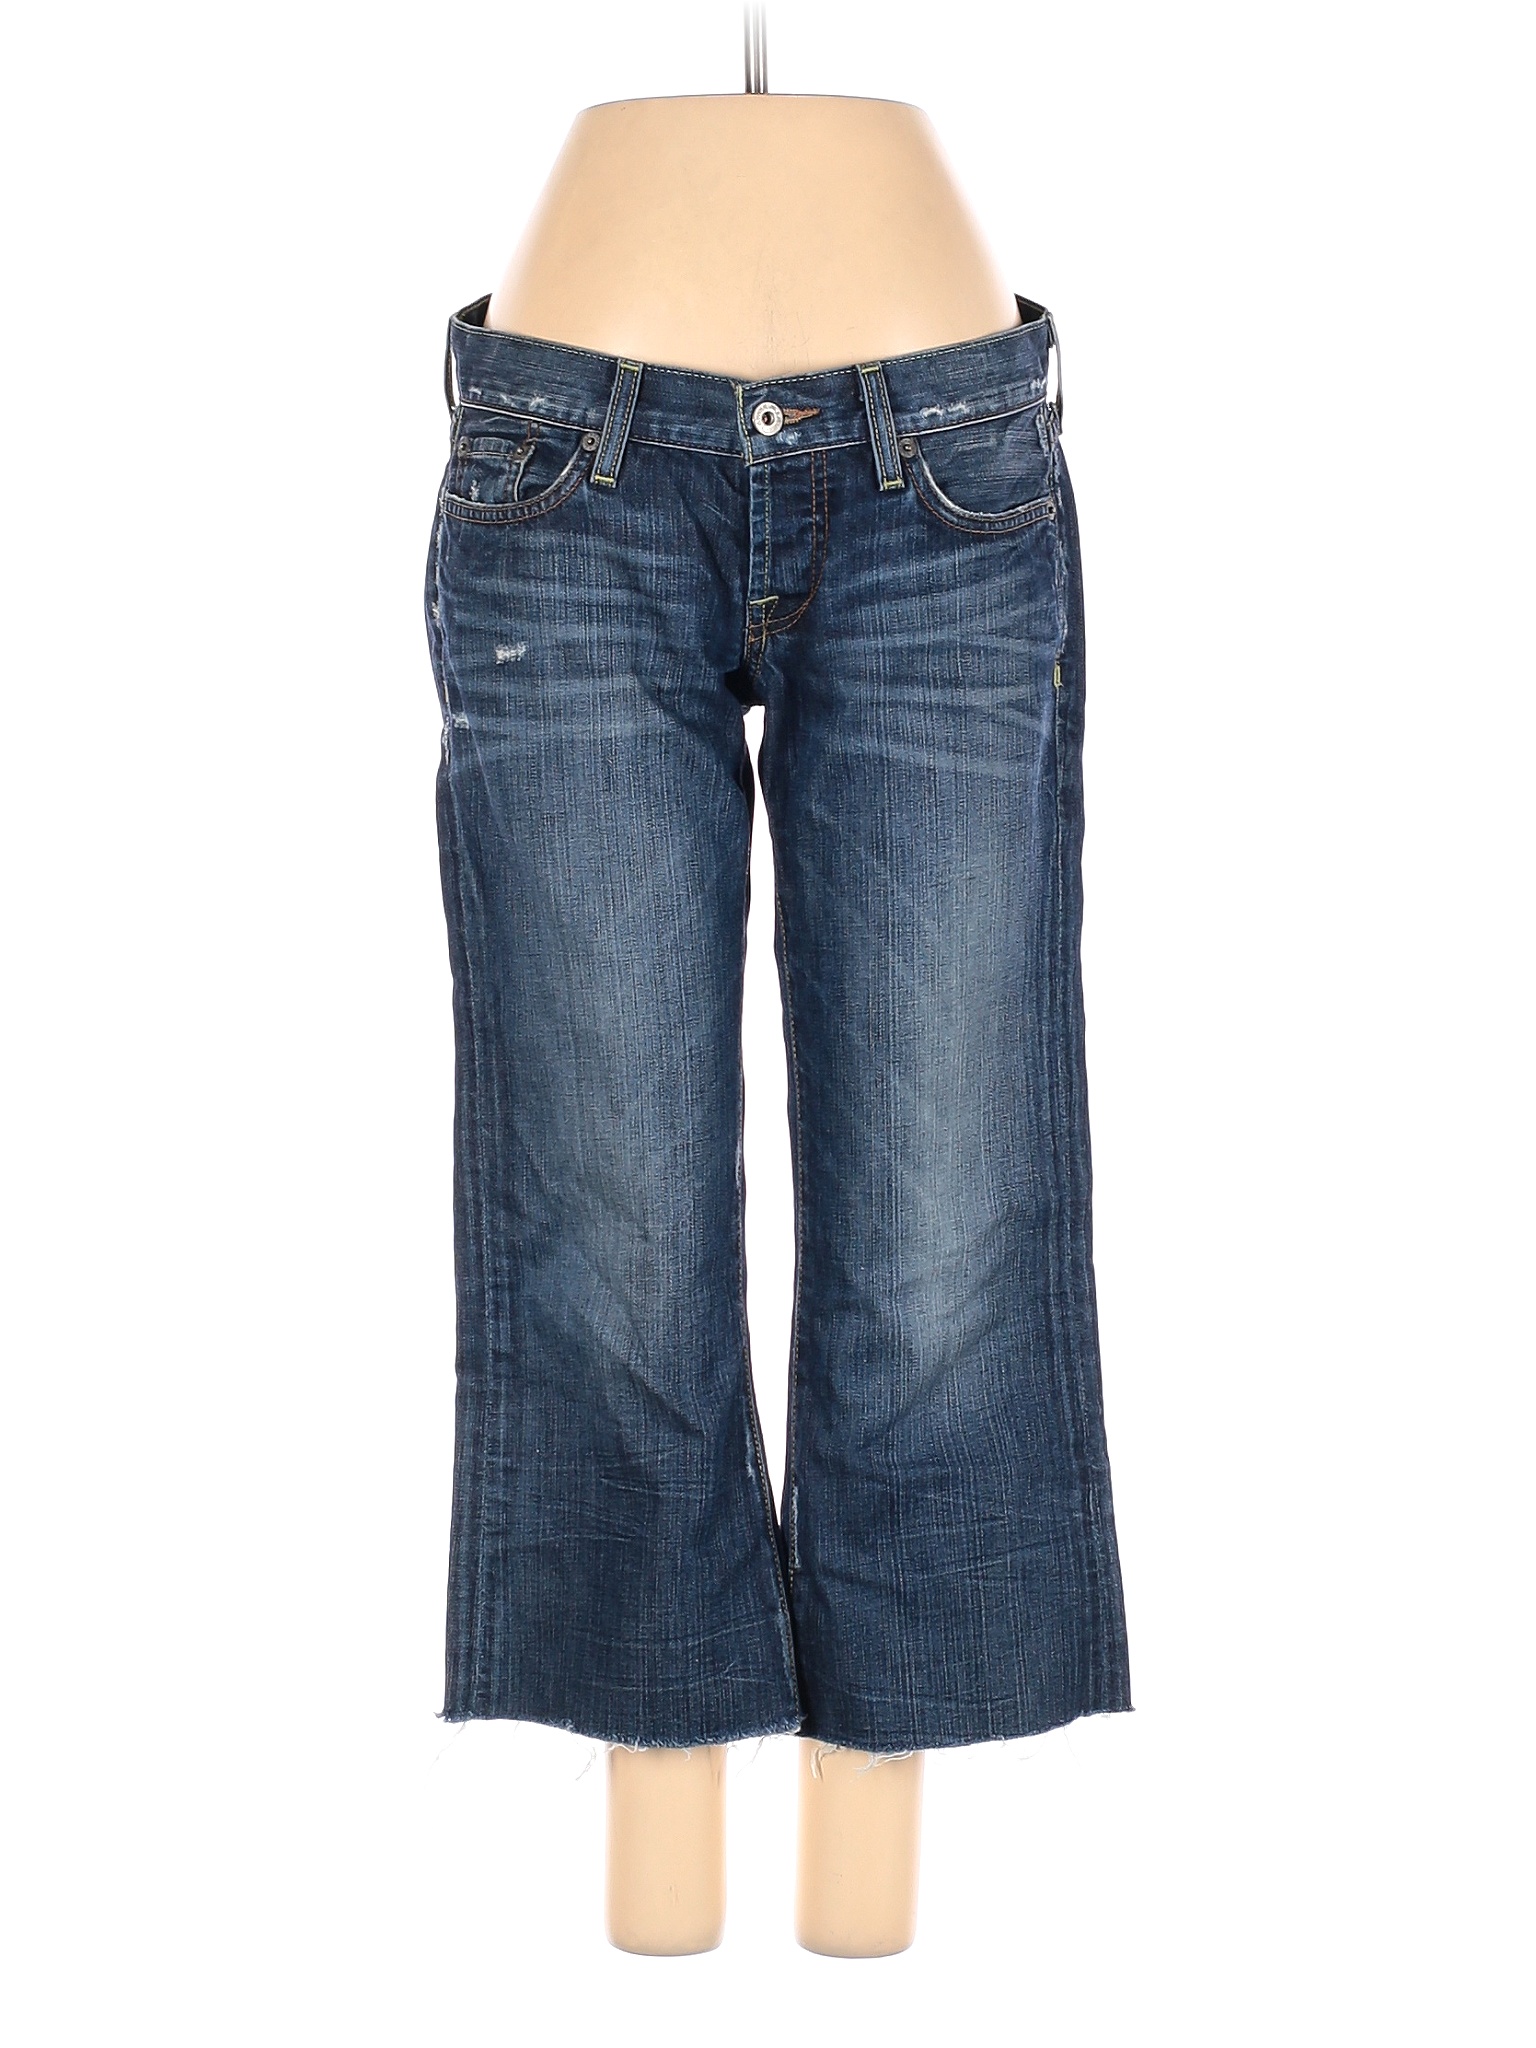 Lucky Brand Gene Montesano Lil Tahiti Jeans Size 4/27 Women’s